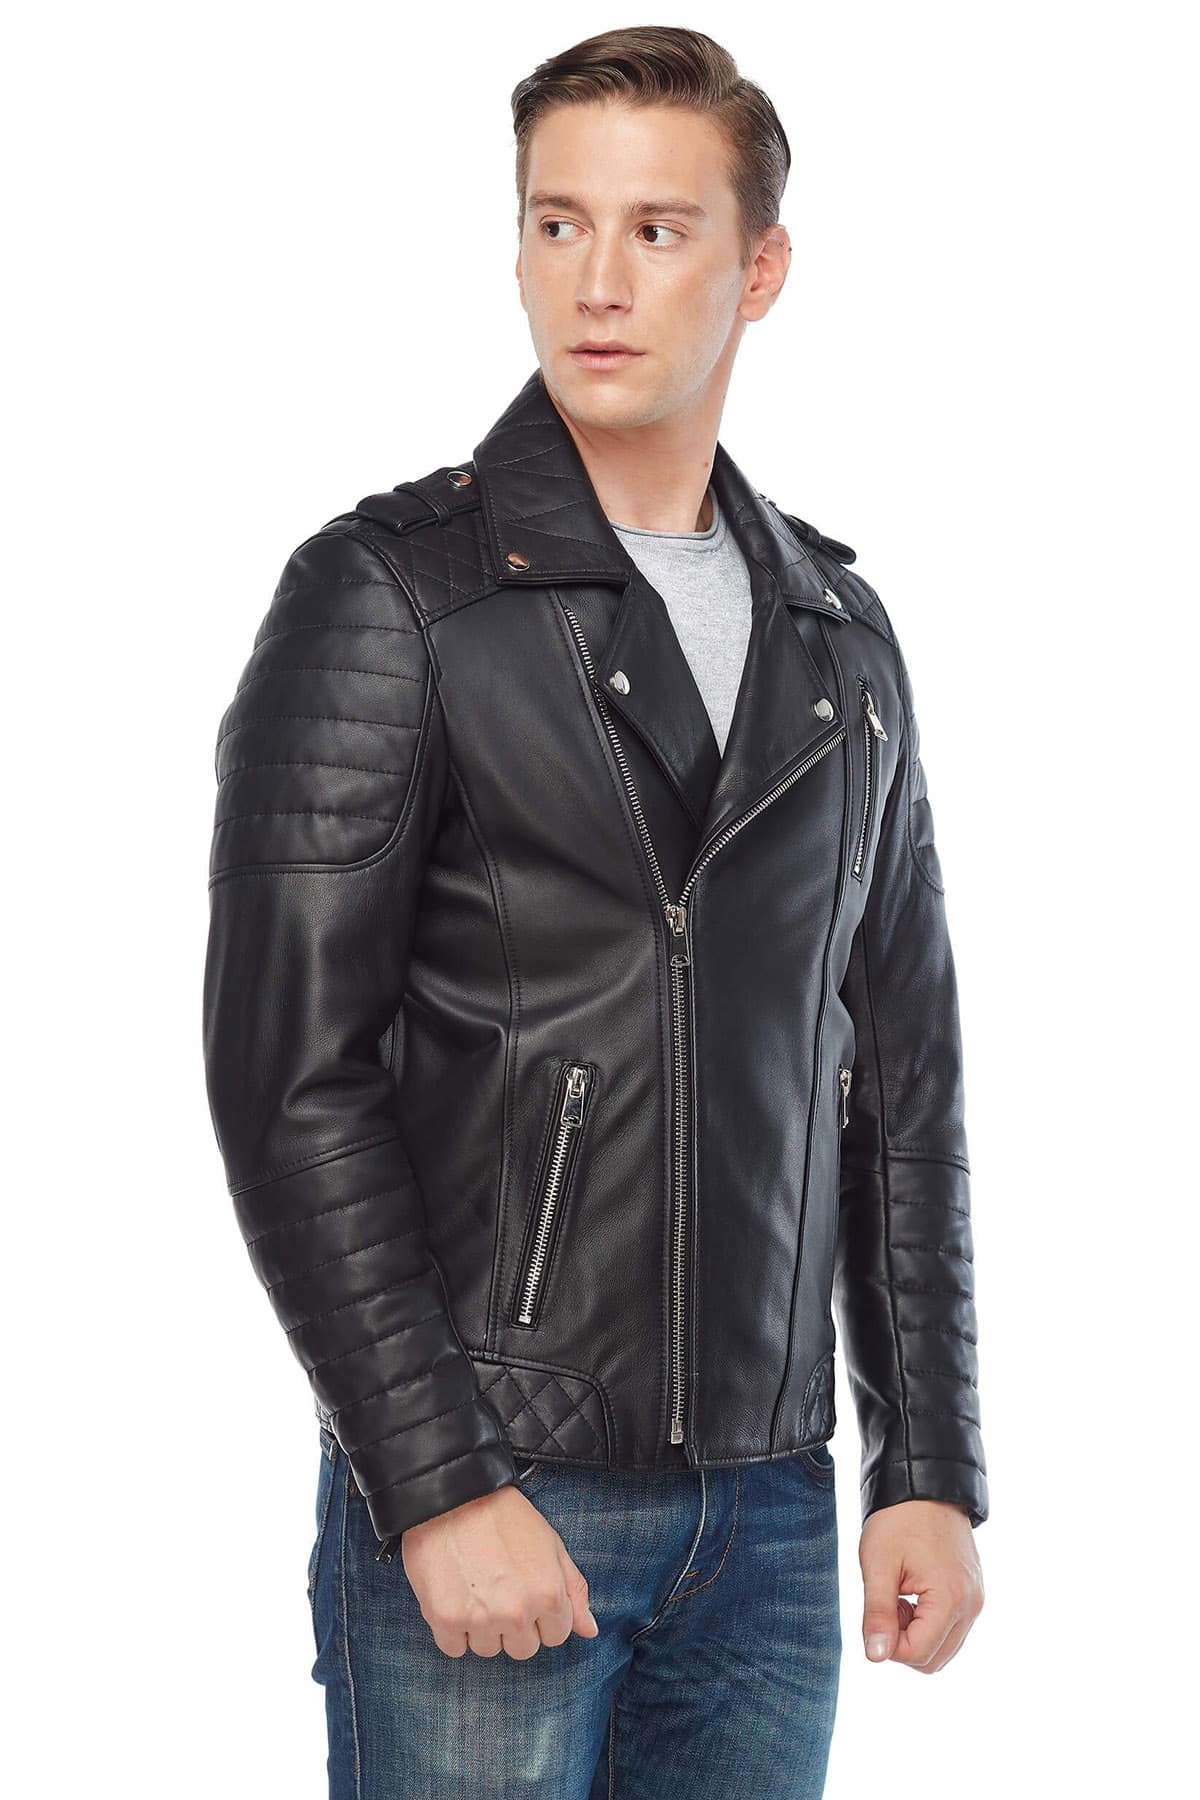 George Barnett Men's 100 % Real Black Leather Biker Jacket